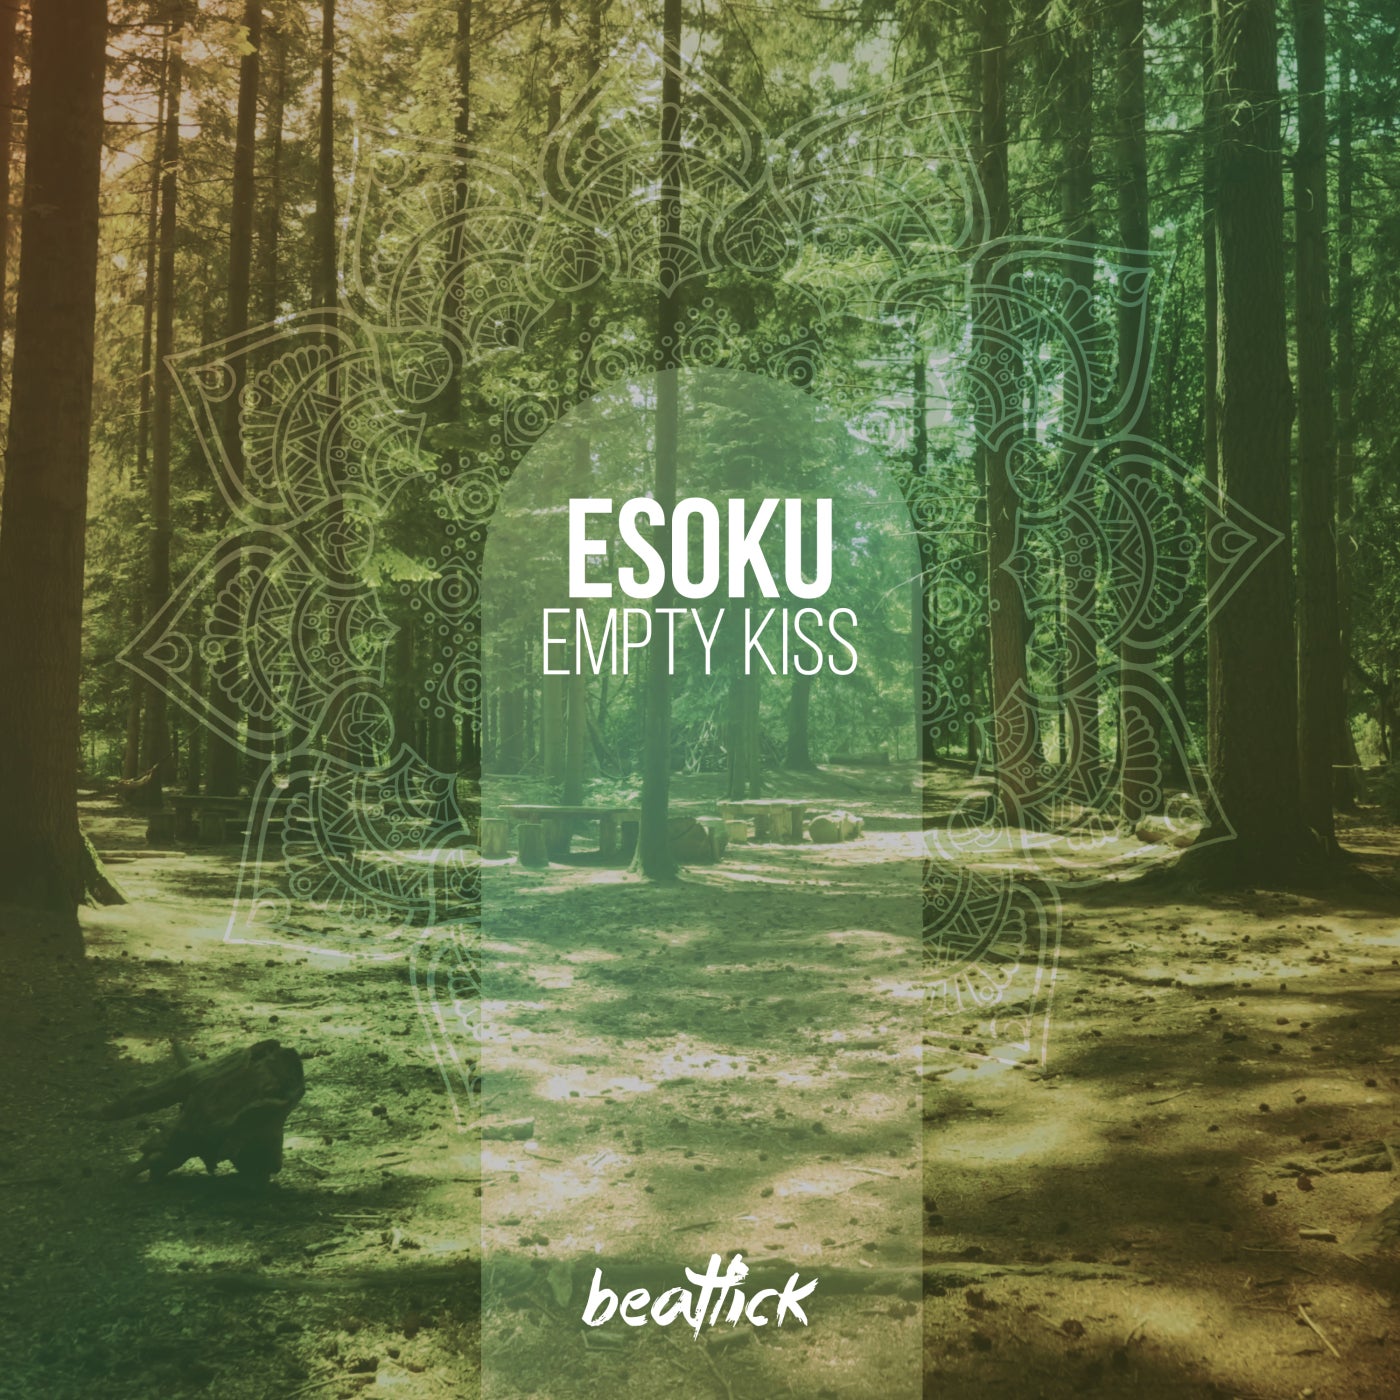 Esoku - Empty Kiss (Original Mix)